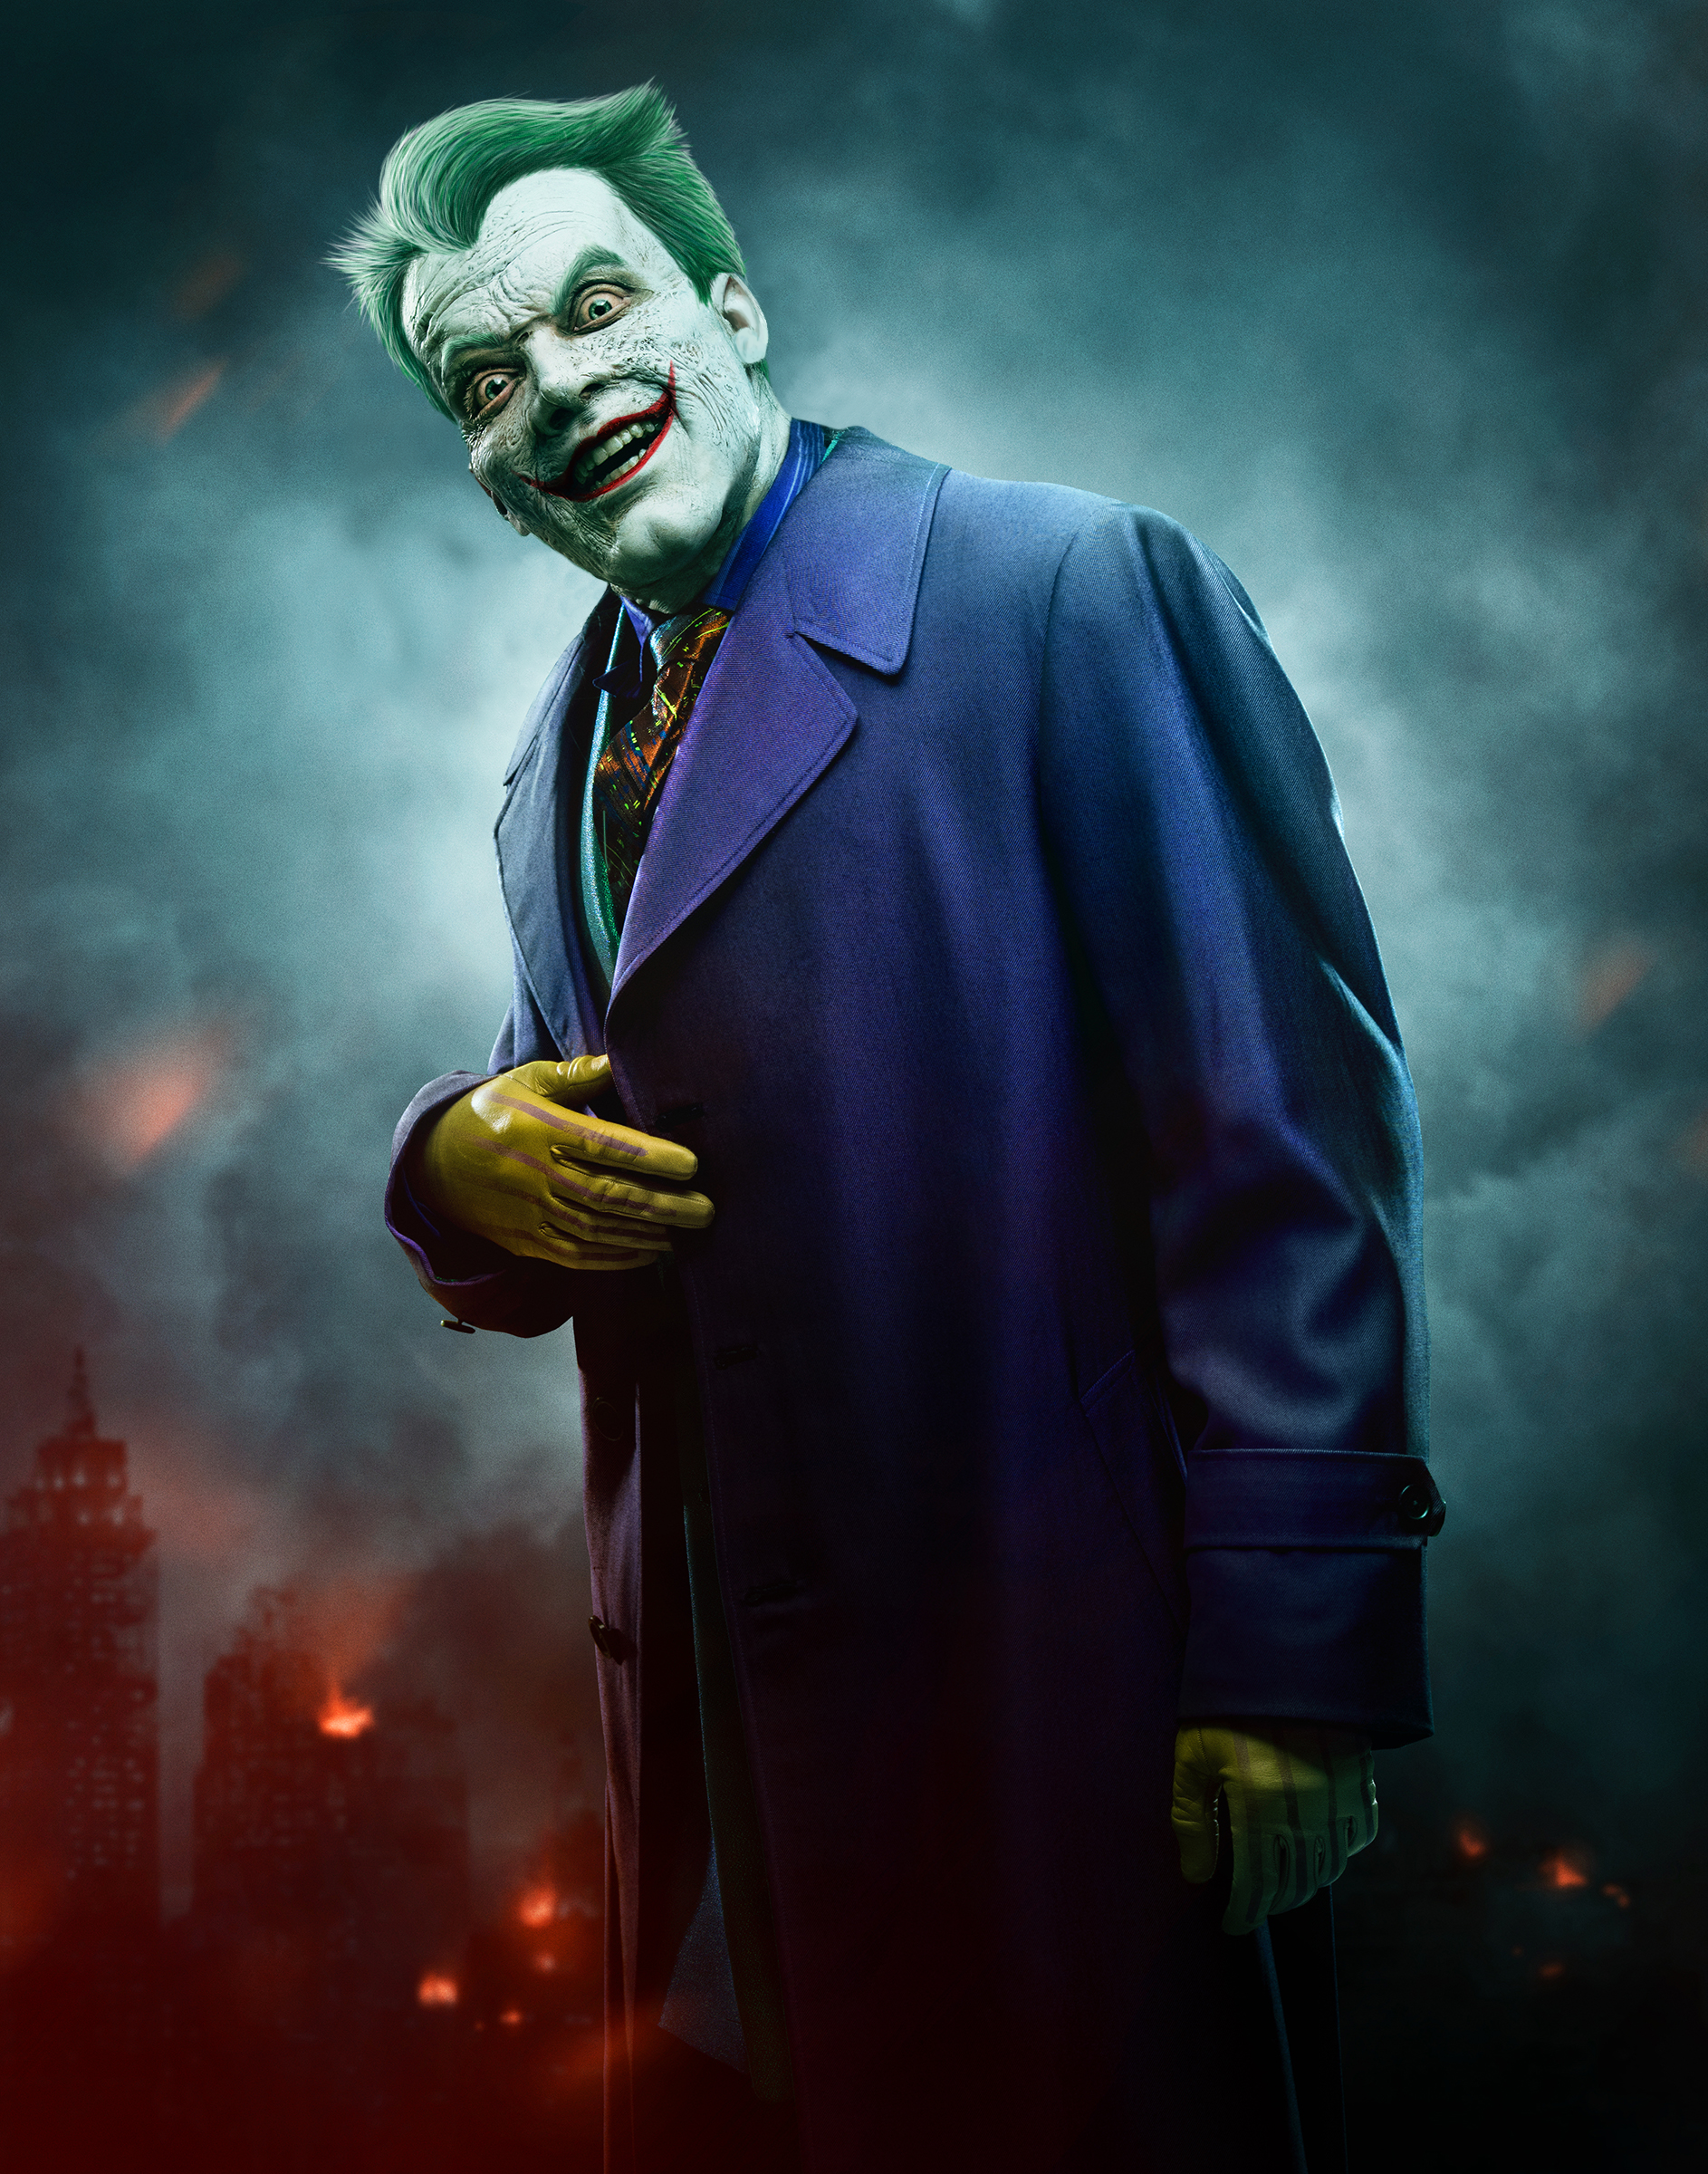 Gotham Joker Final Look (Animated Series Style) by JSComicArt on DeviantArt